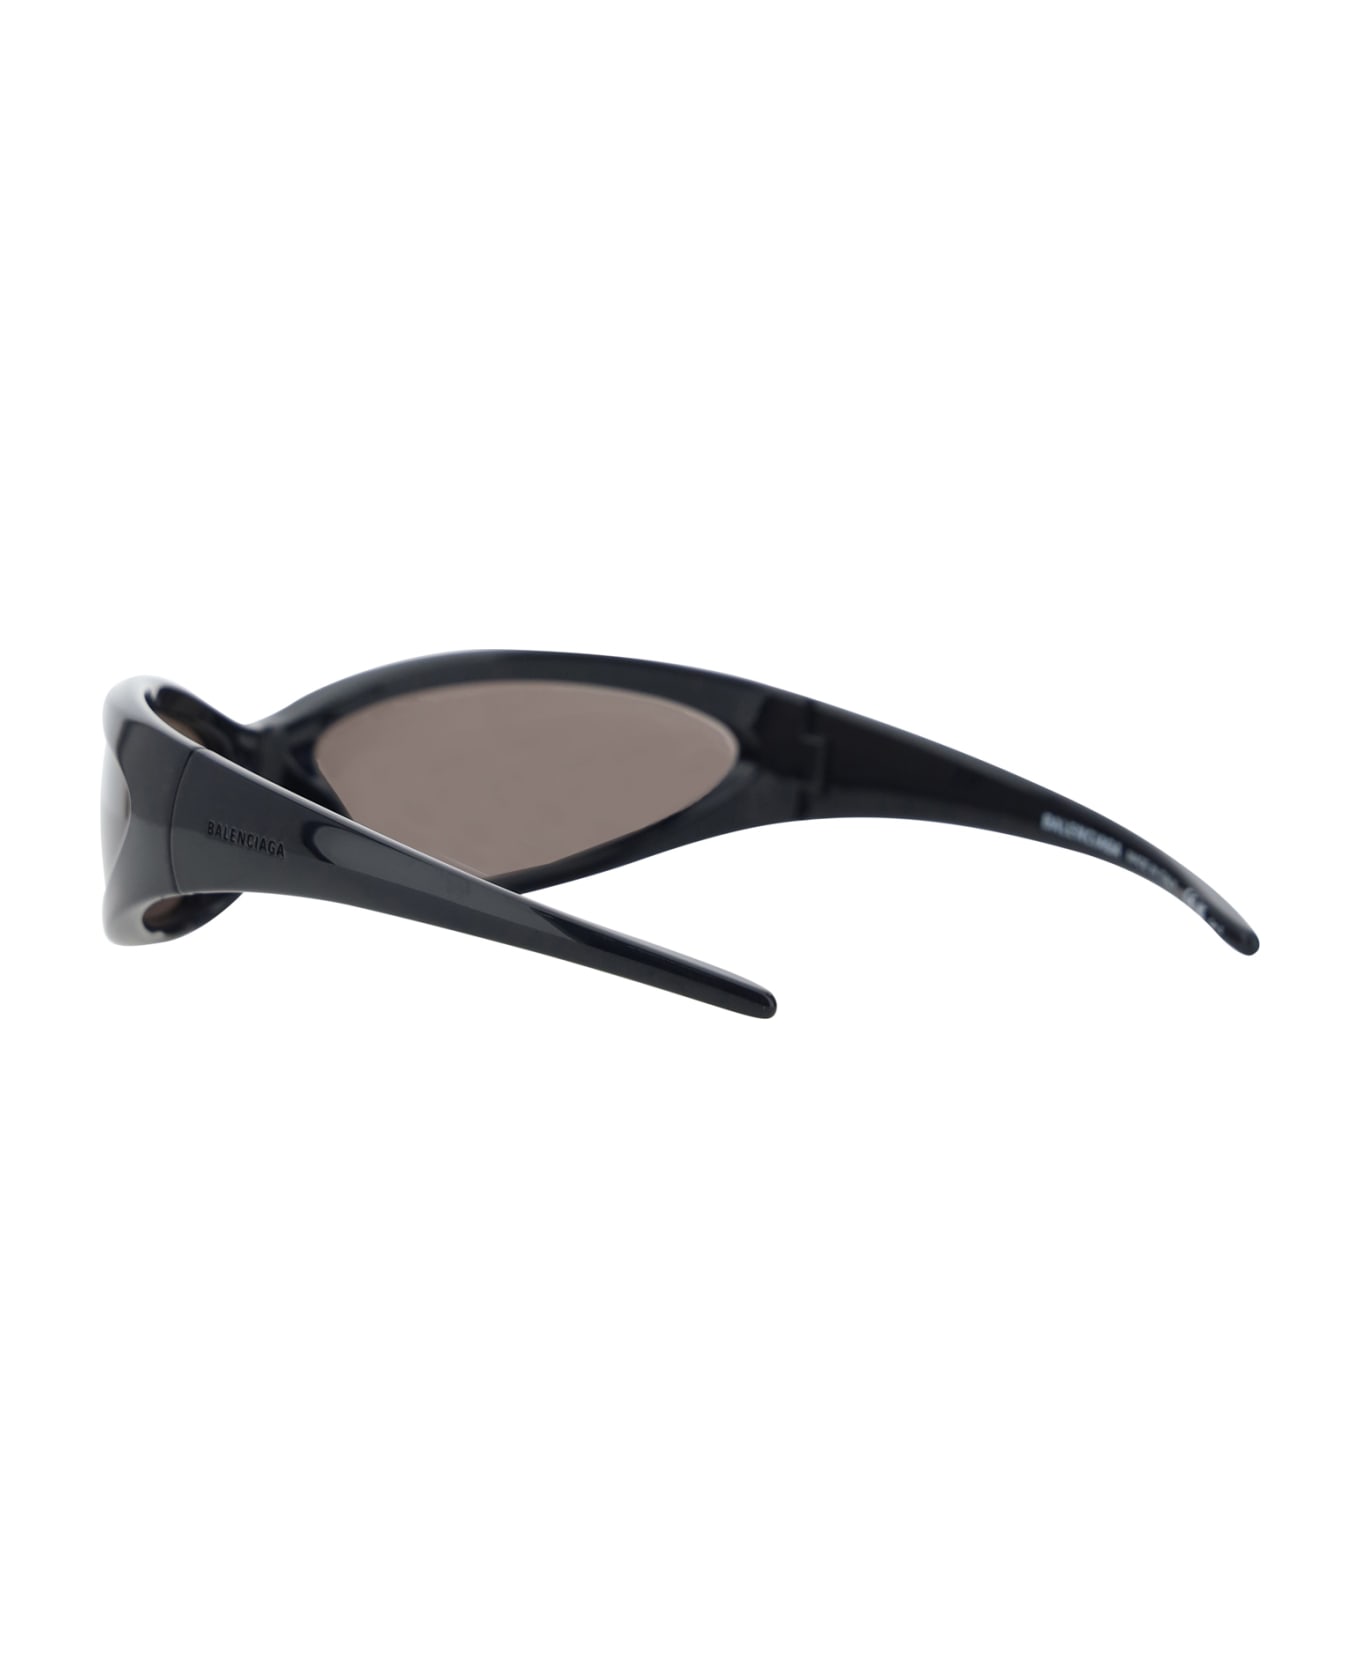 Balenciaga Skin Cat Sunglasses - Black サングラス